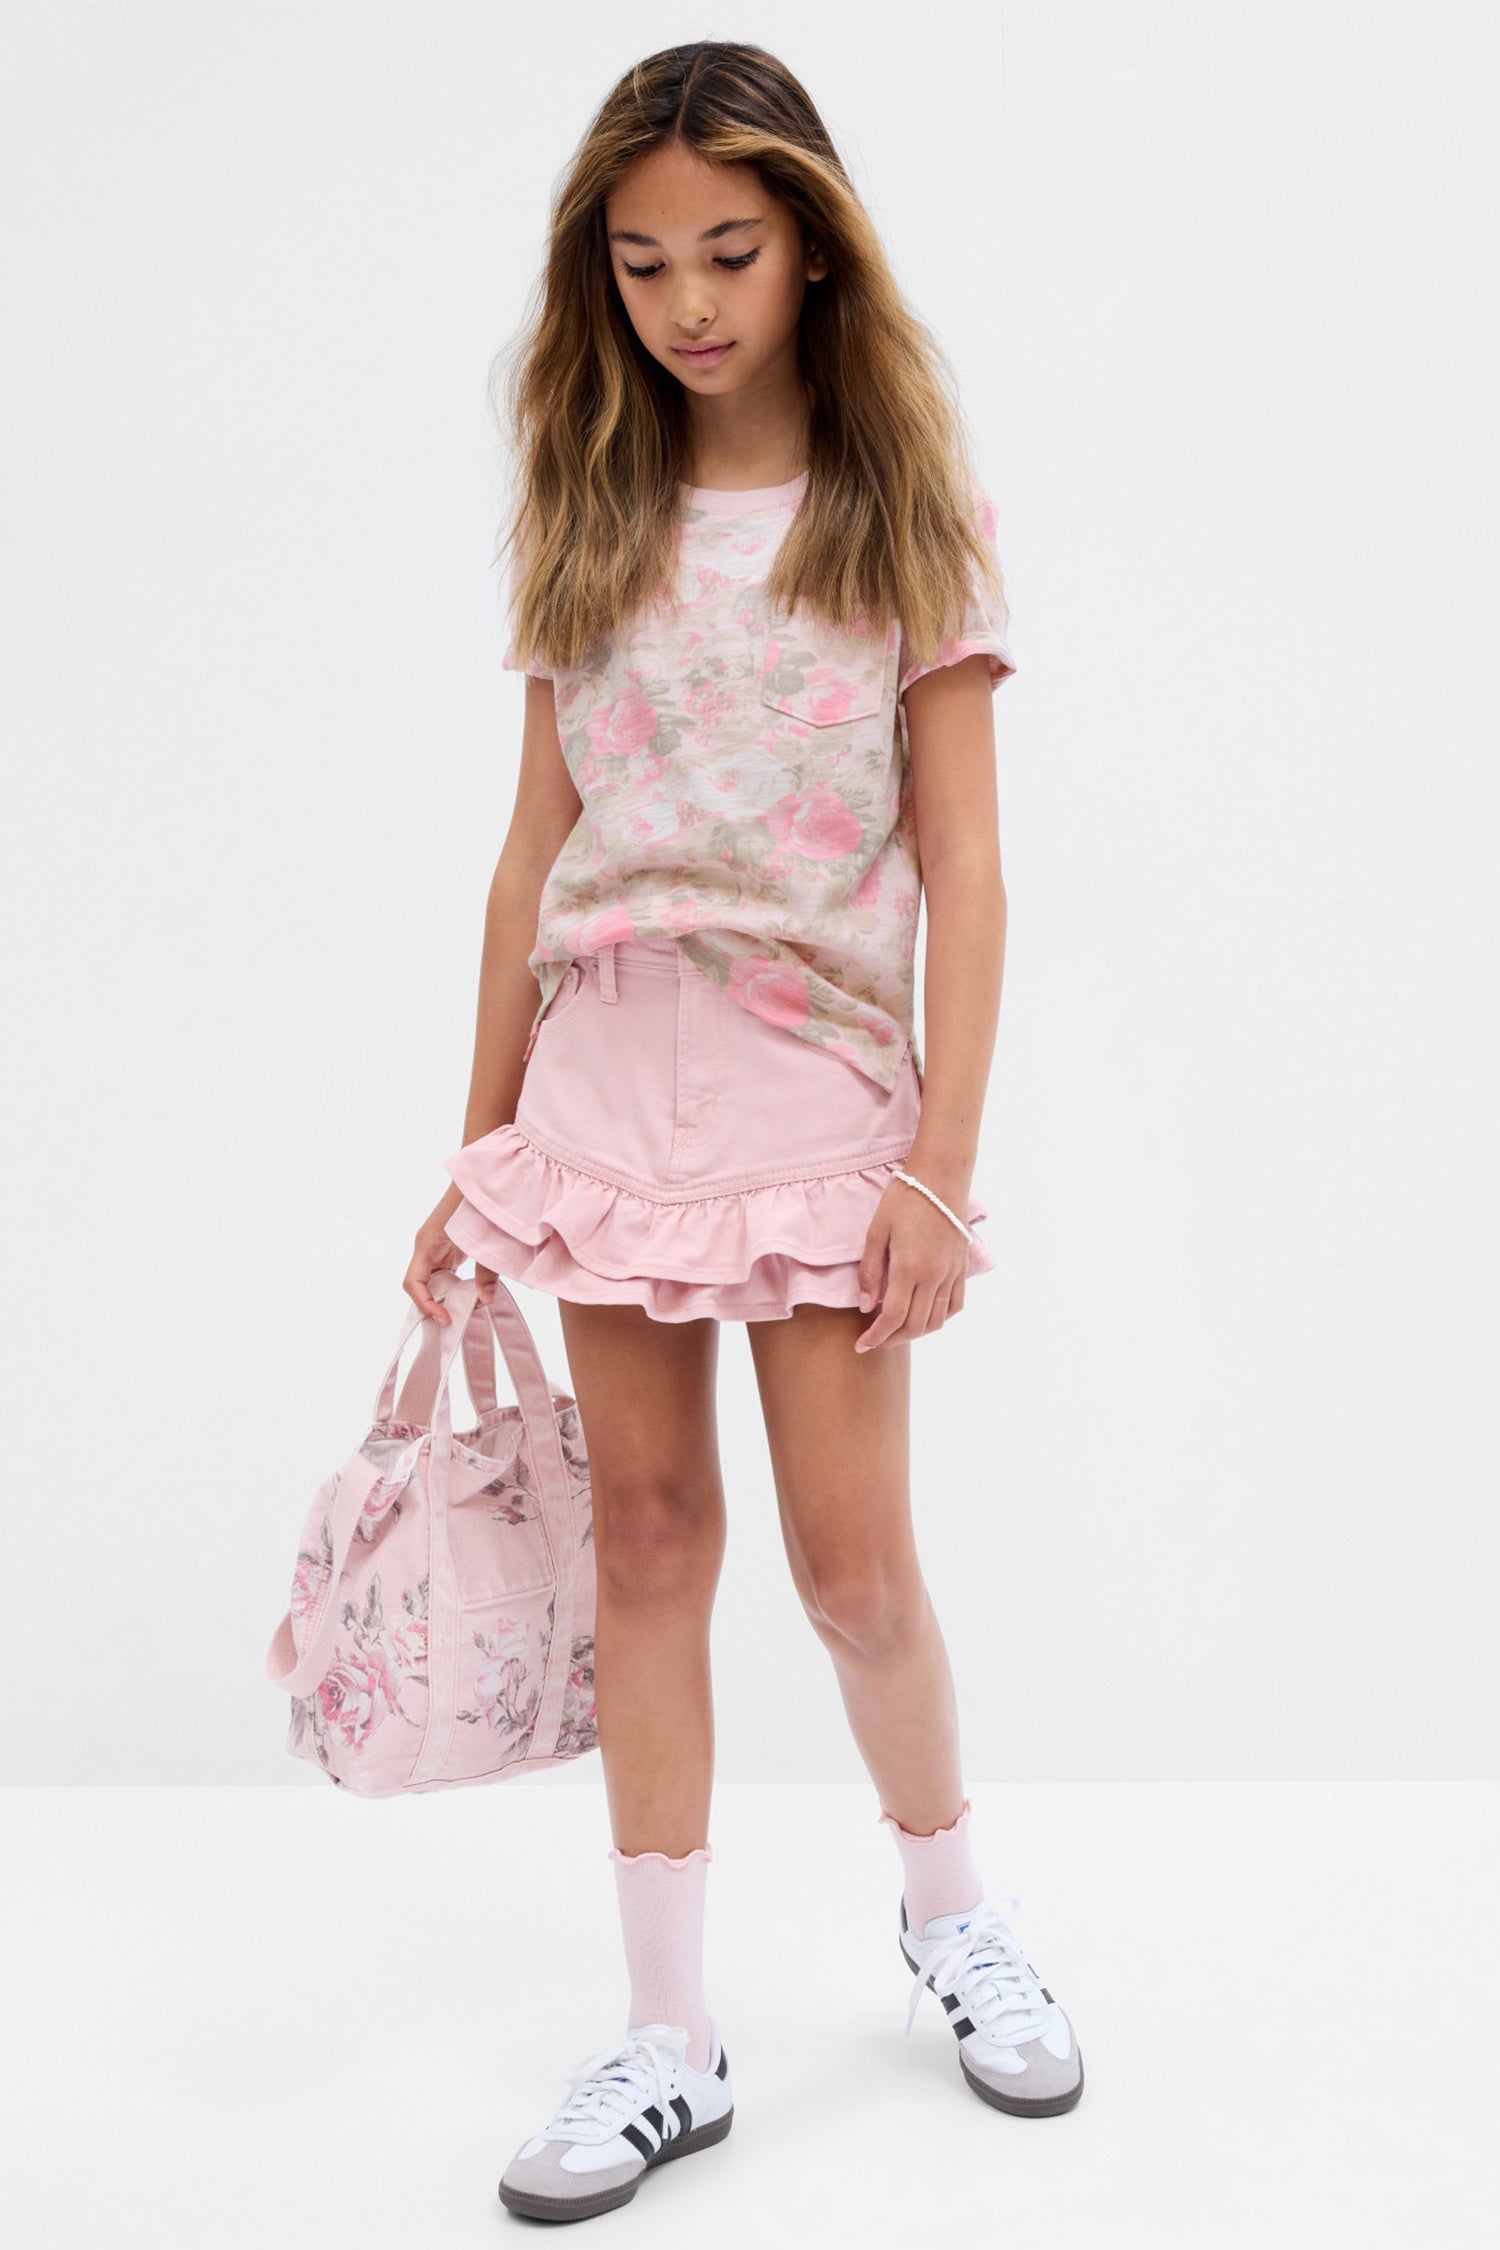 Model wearing kids pink denim mini skirt with ruffle hem